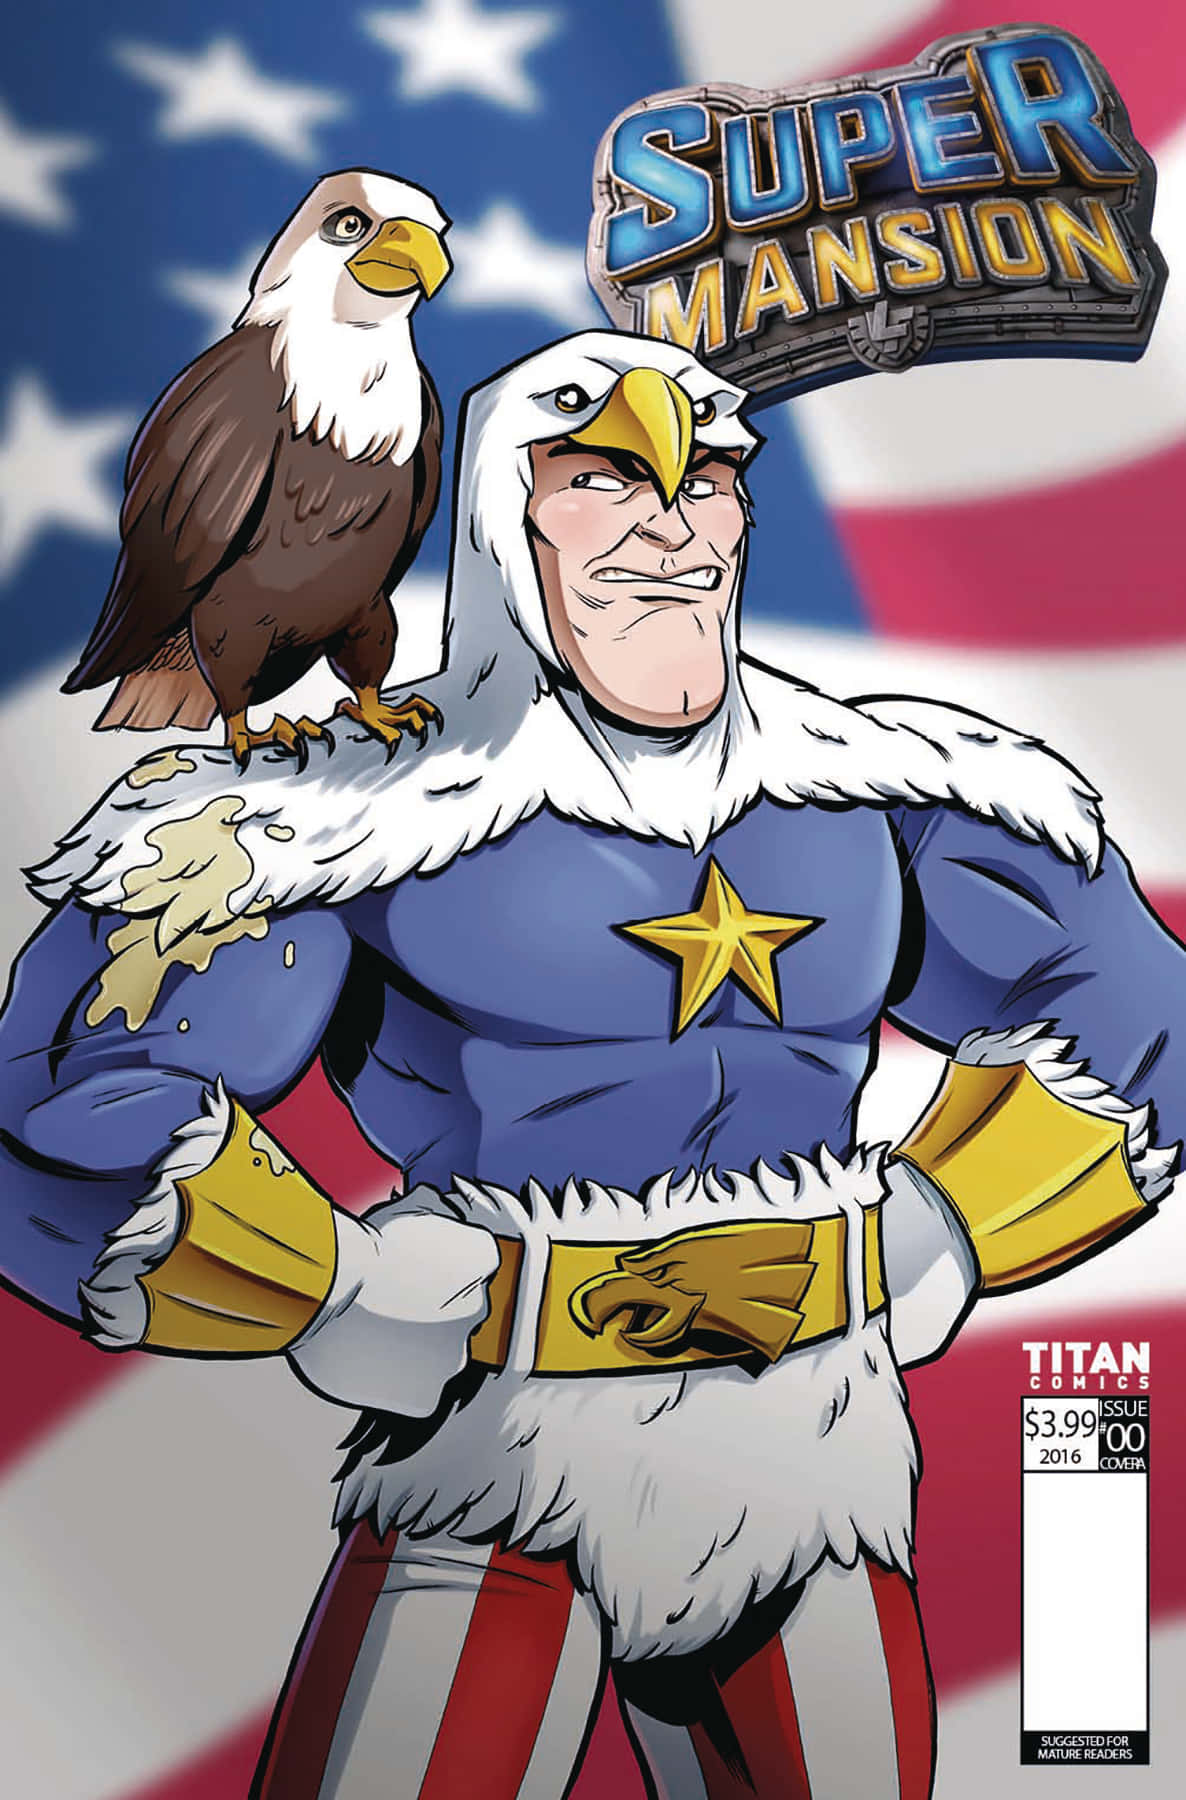 American Ranger In Supermansion Comics Wallpaper